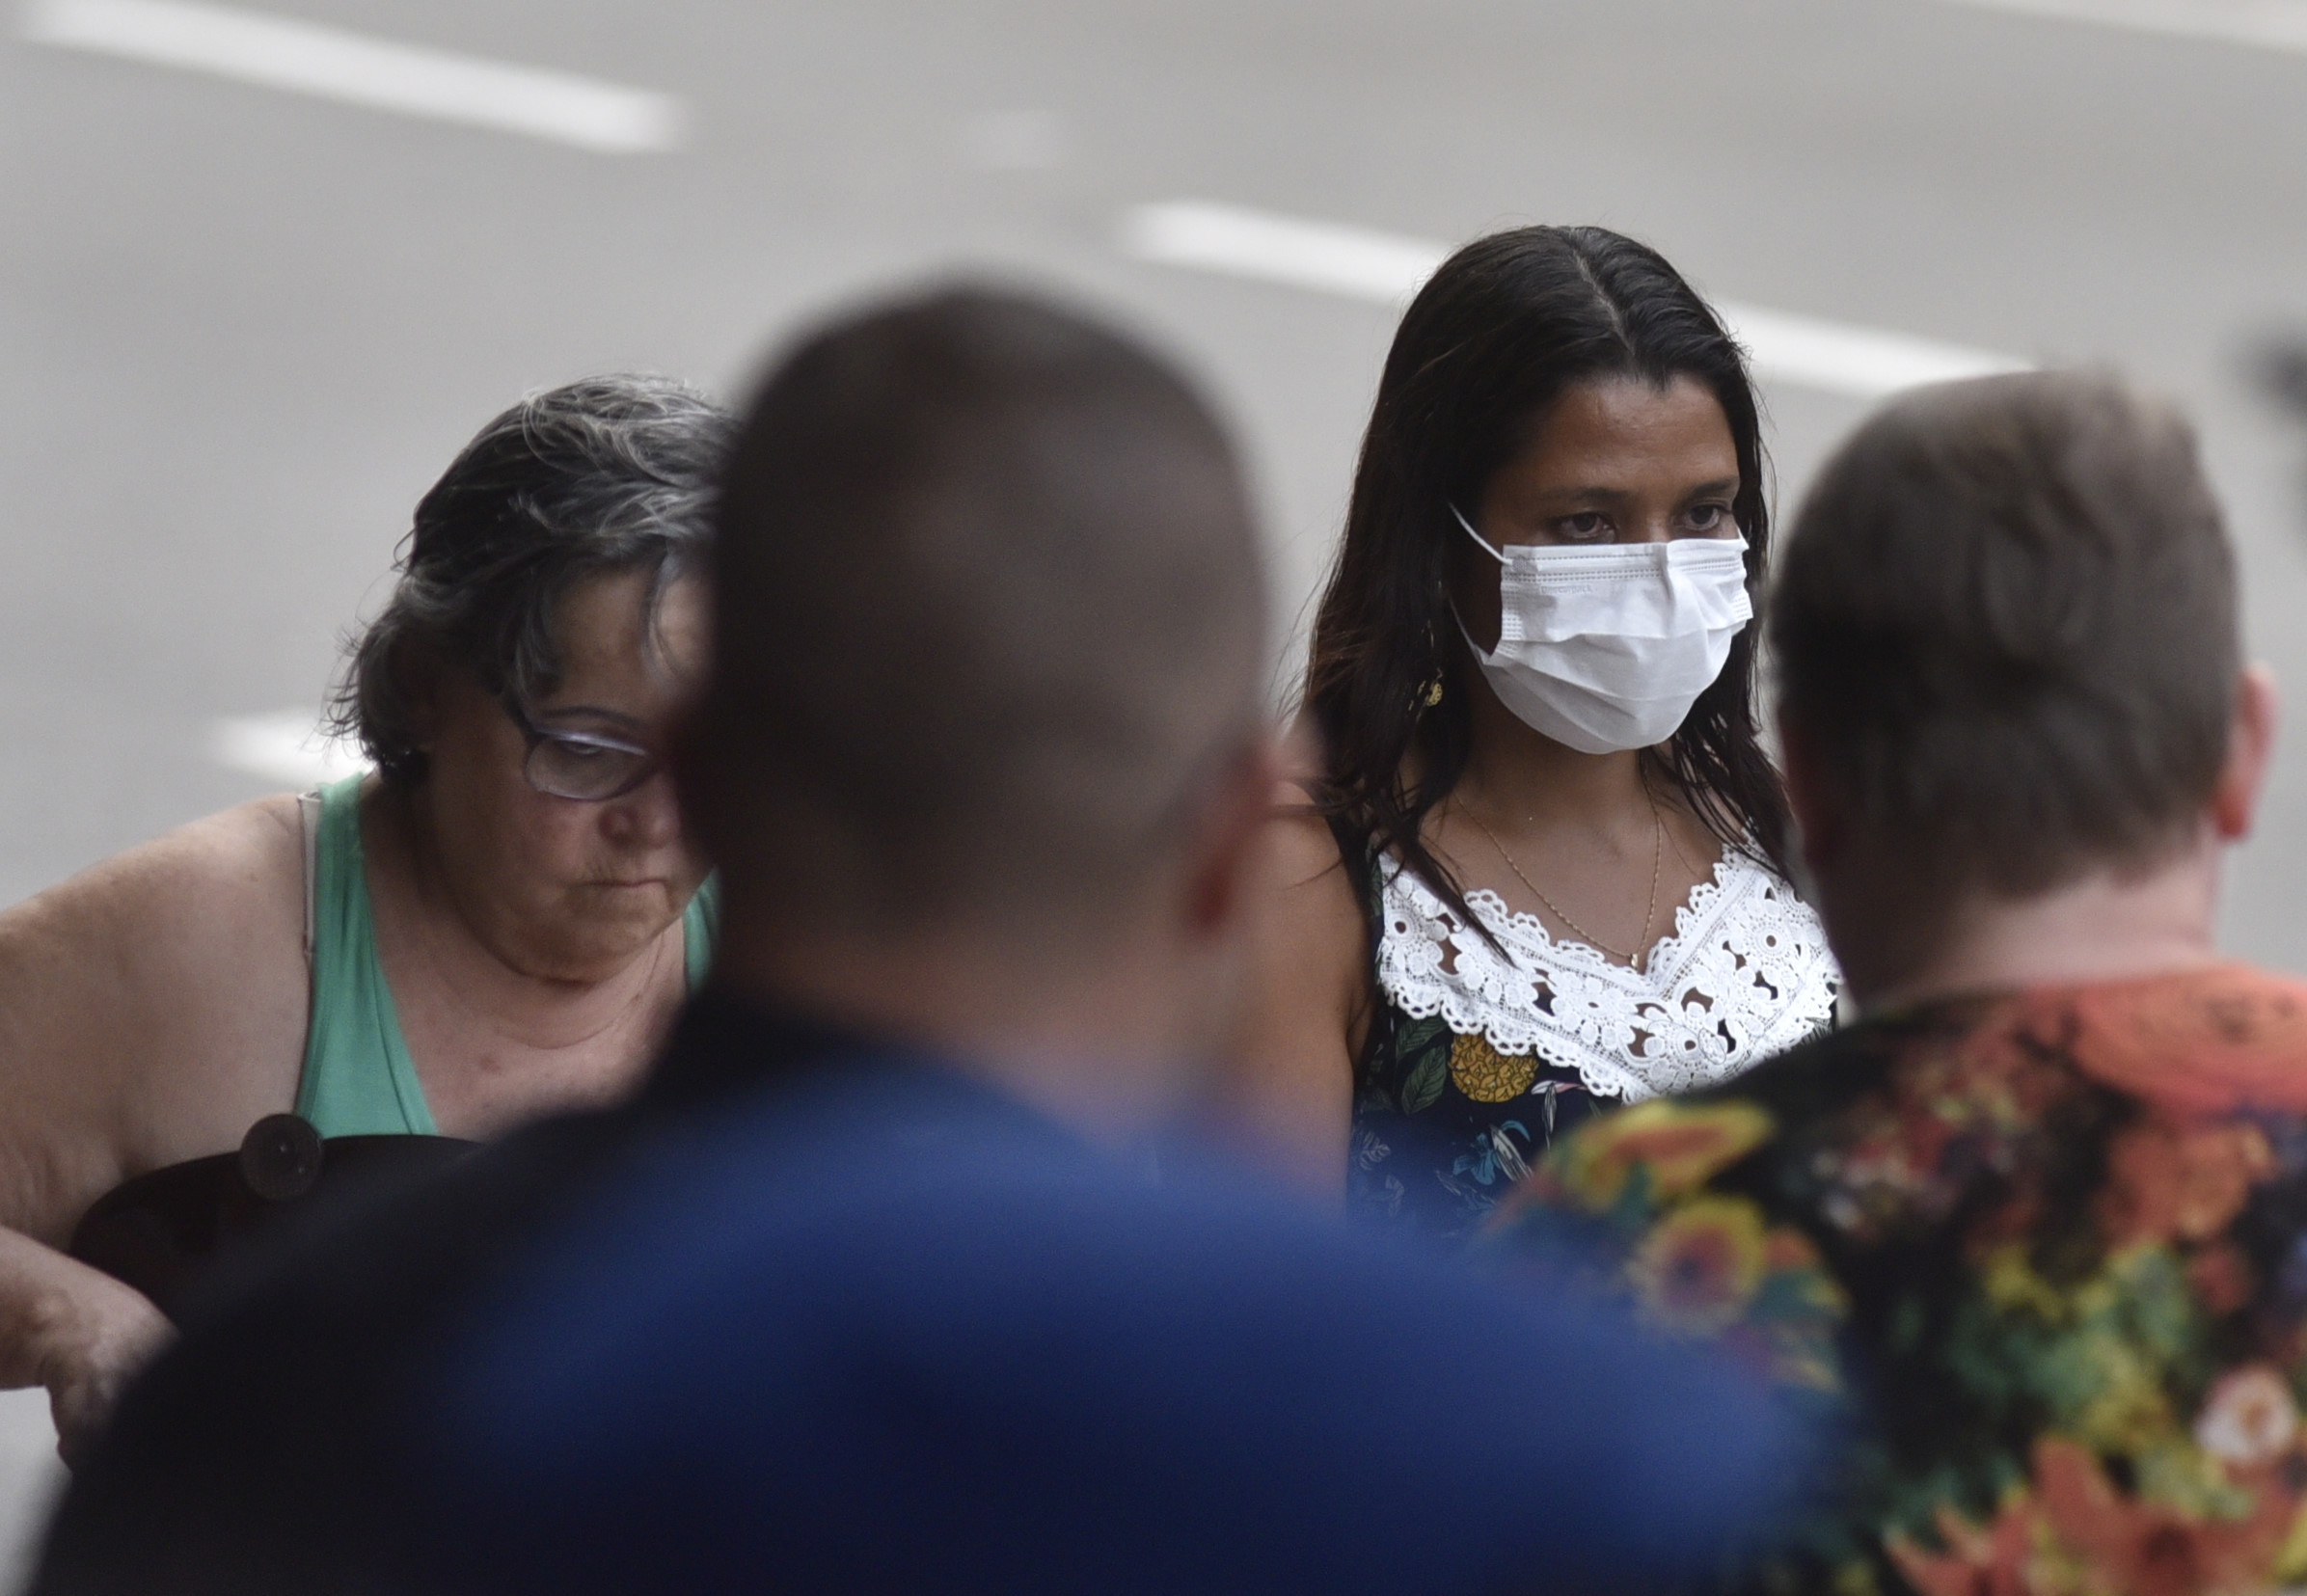 Data: 17/03/2020 - ES - Vitória - Após pandemia de coronavírus pedestre usa máscara na avenida Reta da Penha - Editoria: Cidades - Foto: VItor Jubini - GZ